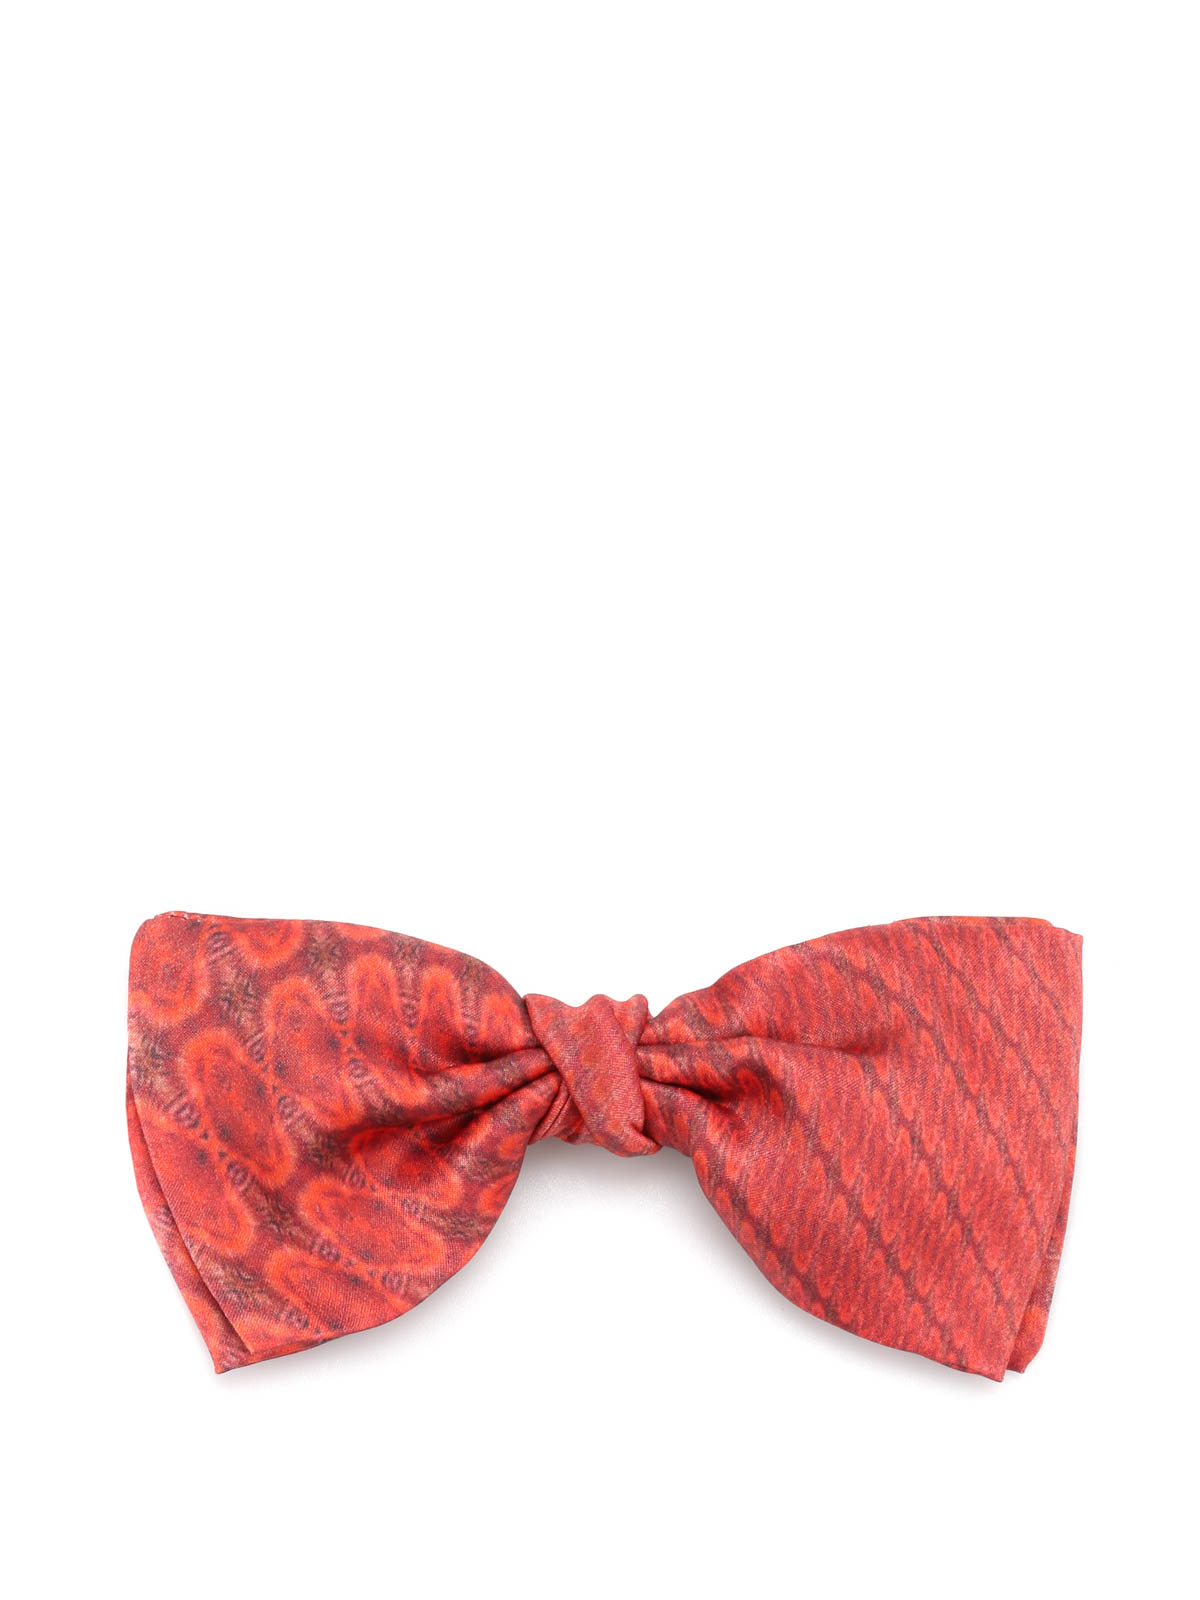 Maria Enrica Nardi Tindari Silk Bow Tie In Red